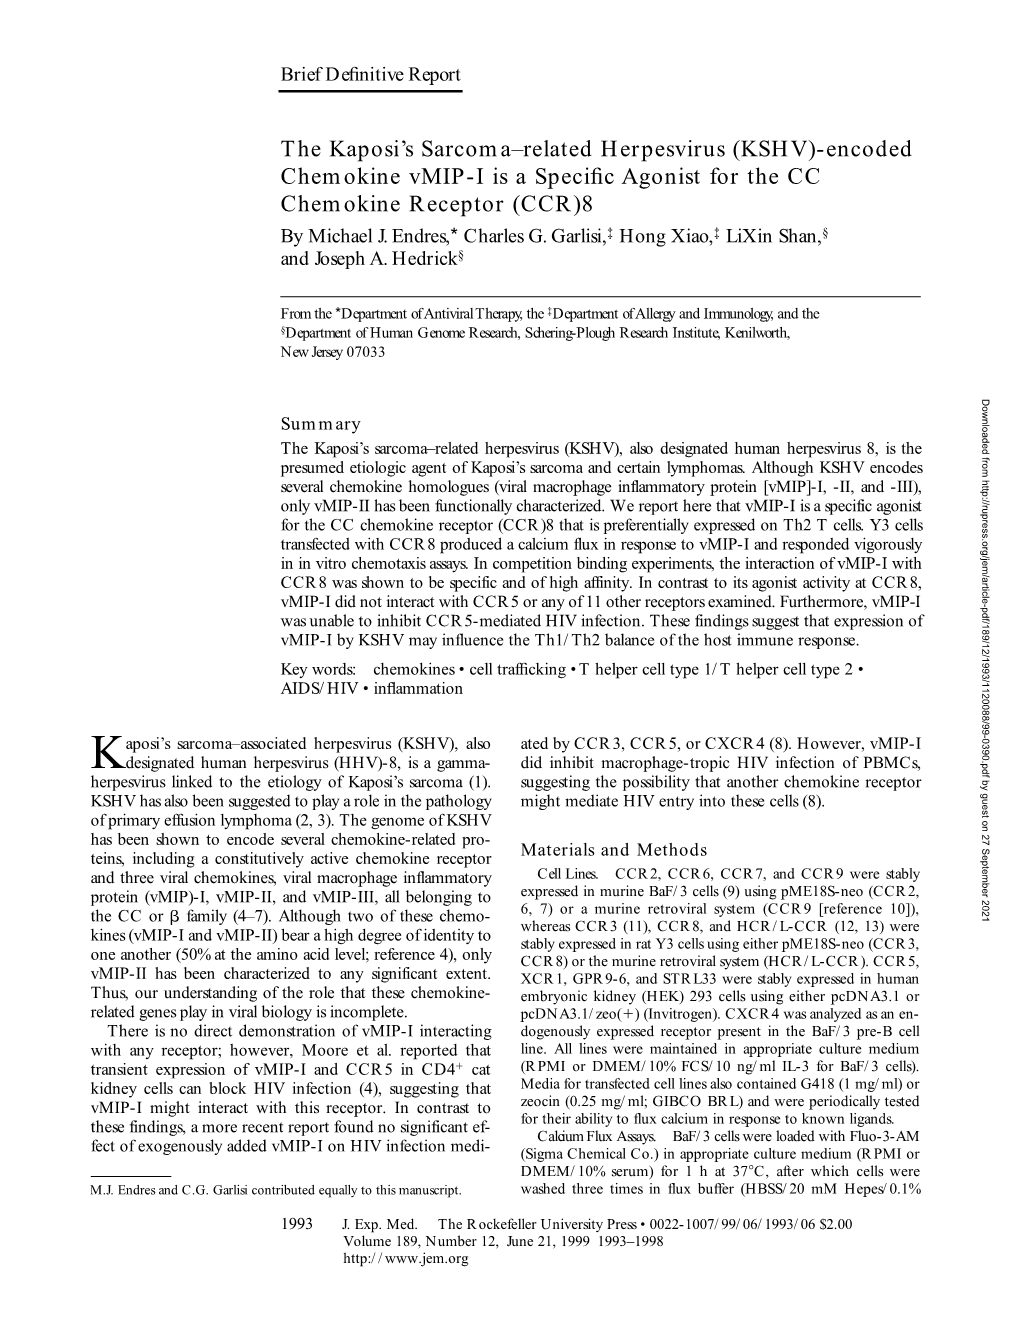 KSHV)-Encoded Chemokine Vmip-I Is a Speciﬁc Agonist for the CC Chemokine Receptor (CCR)8 by Michael J